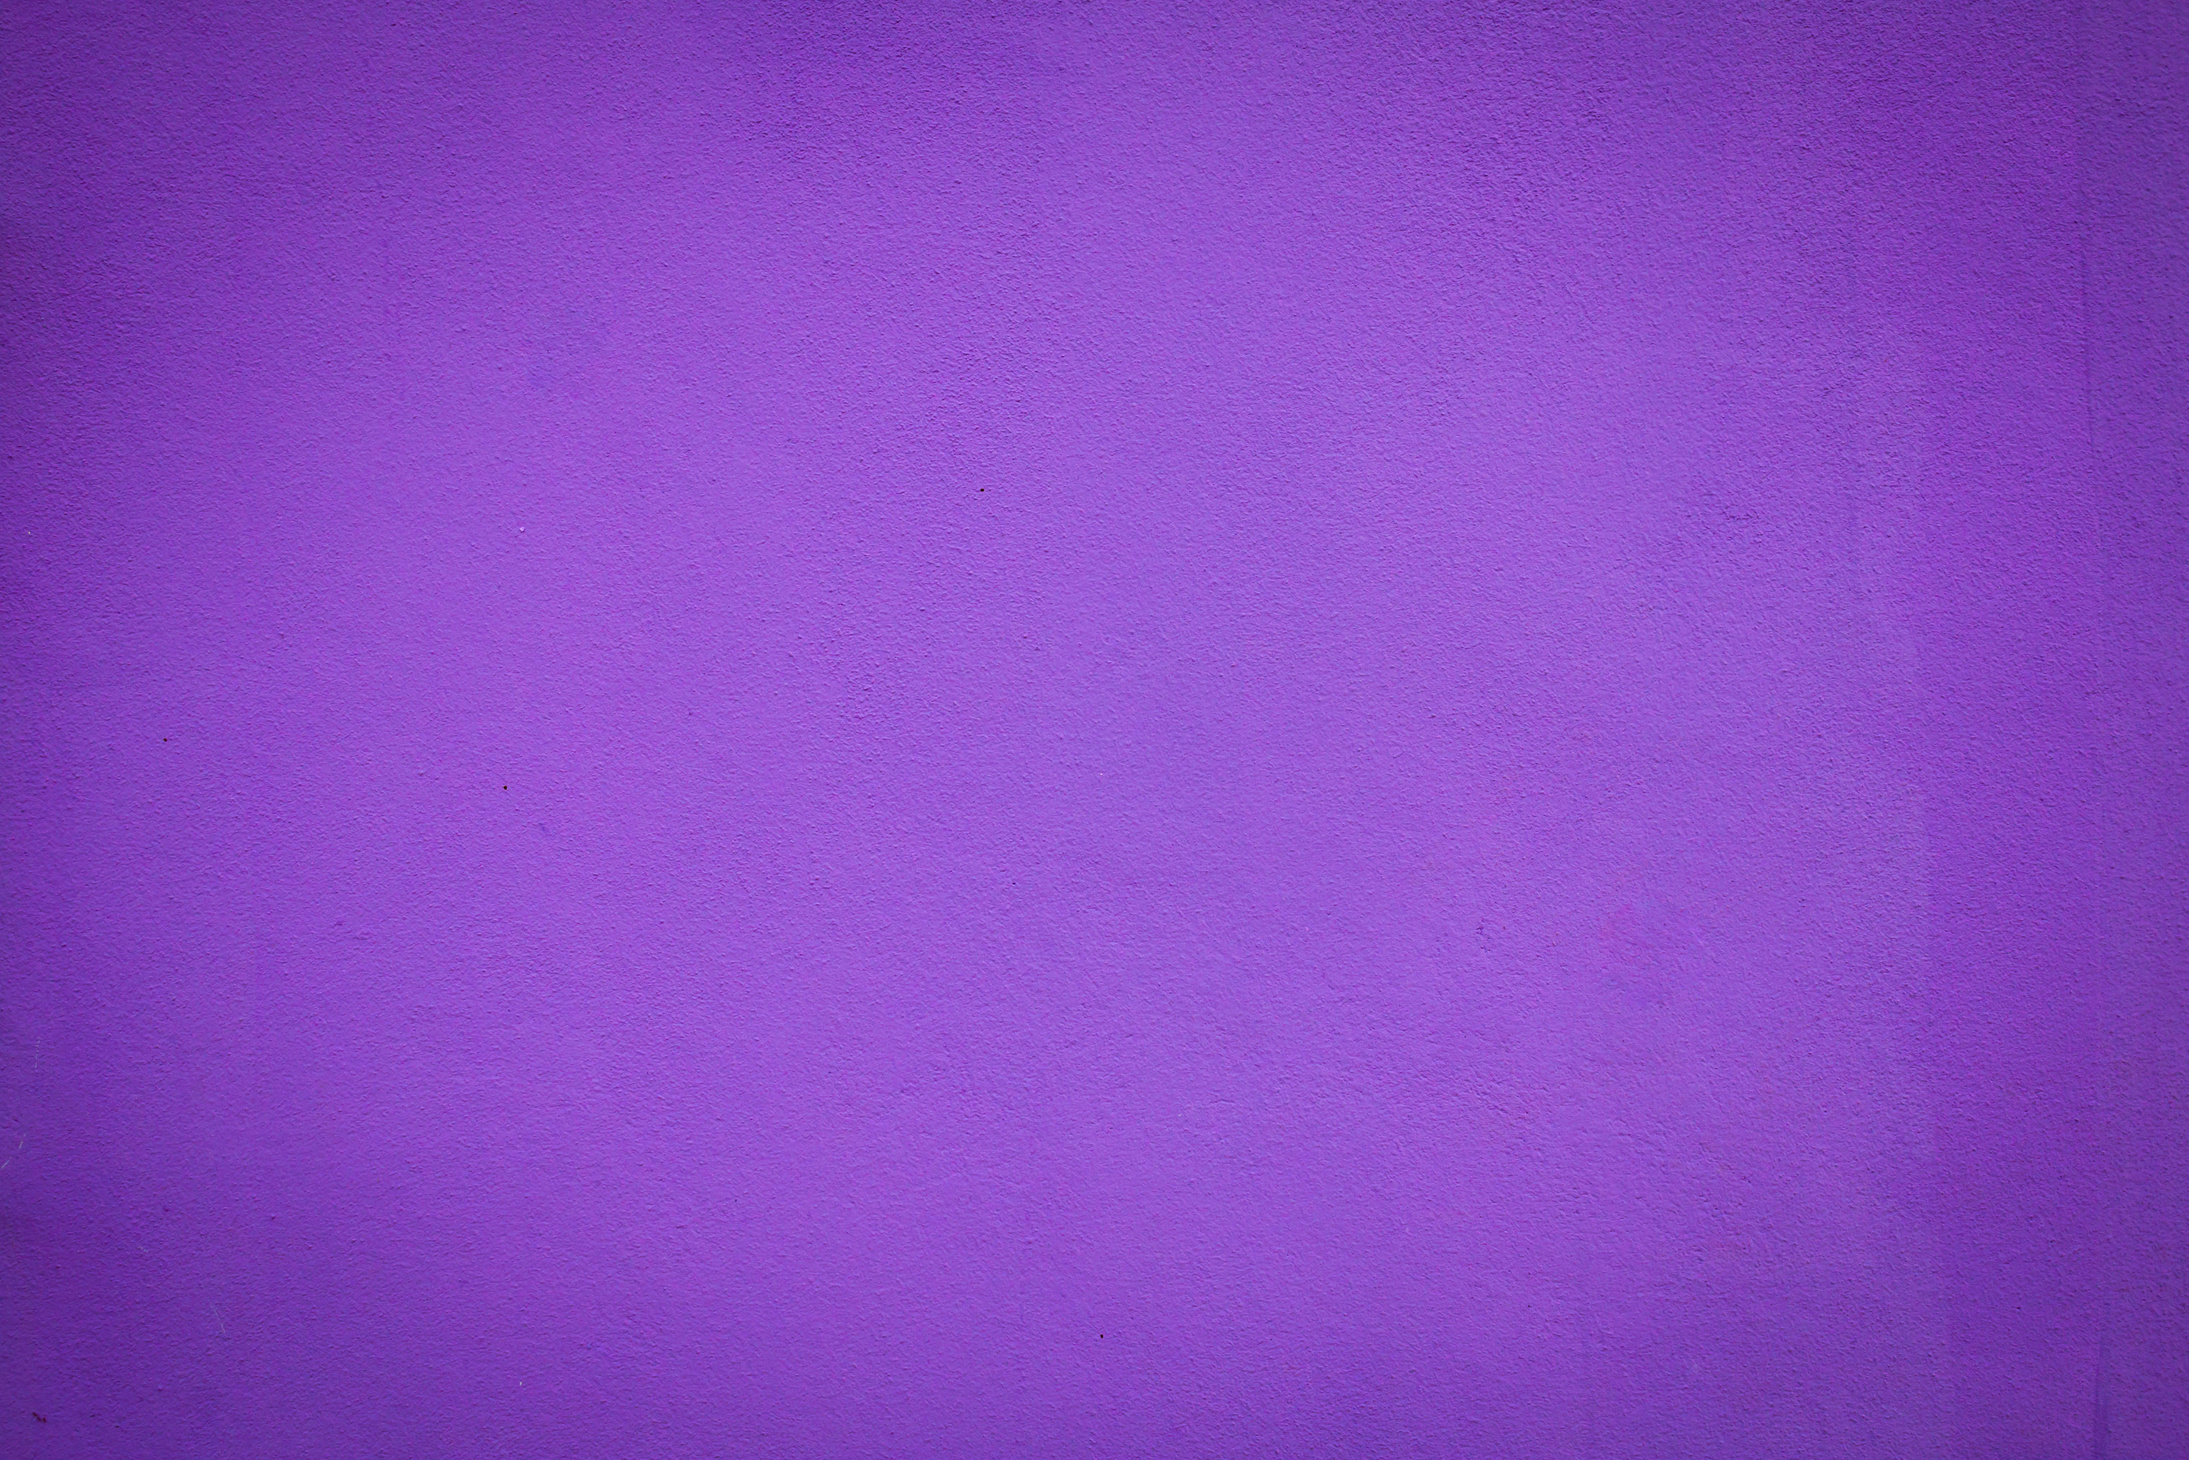 Purple concrete wall background.